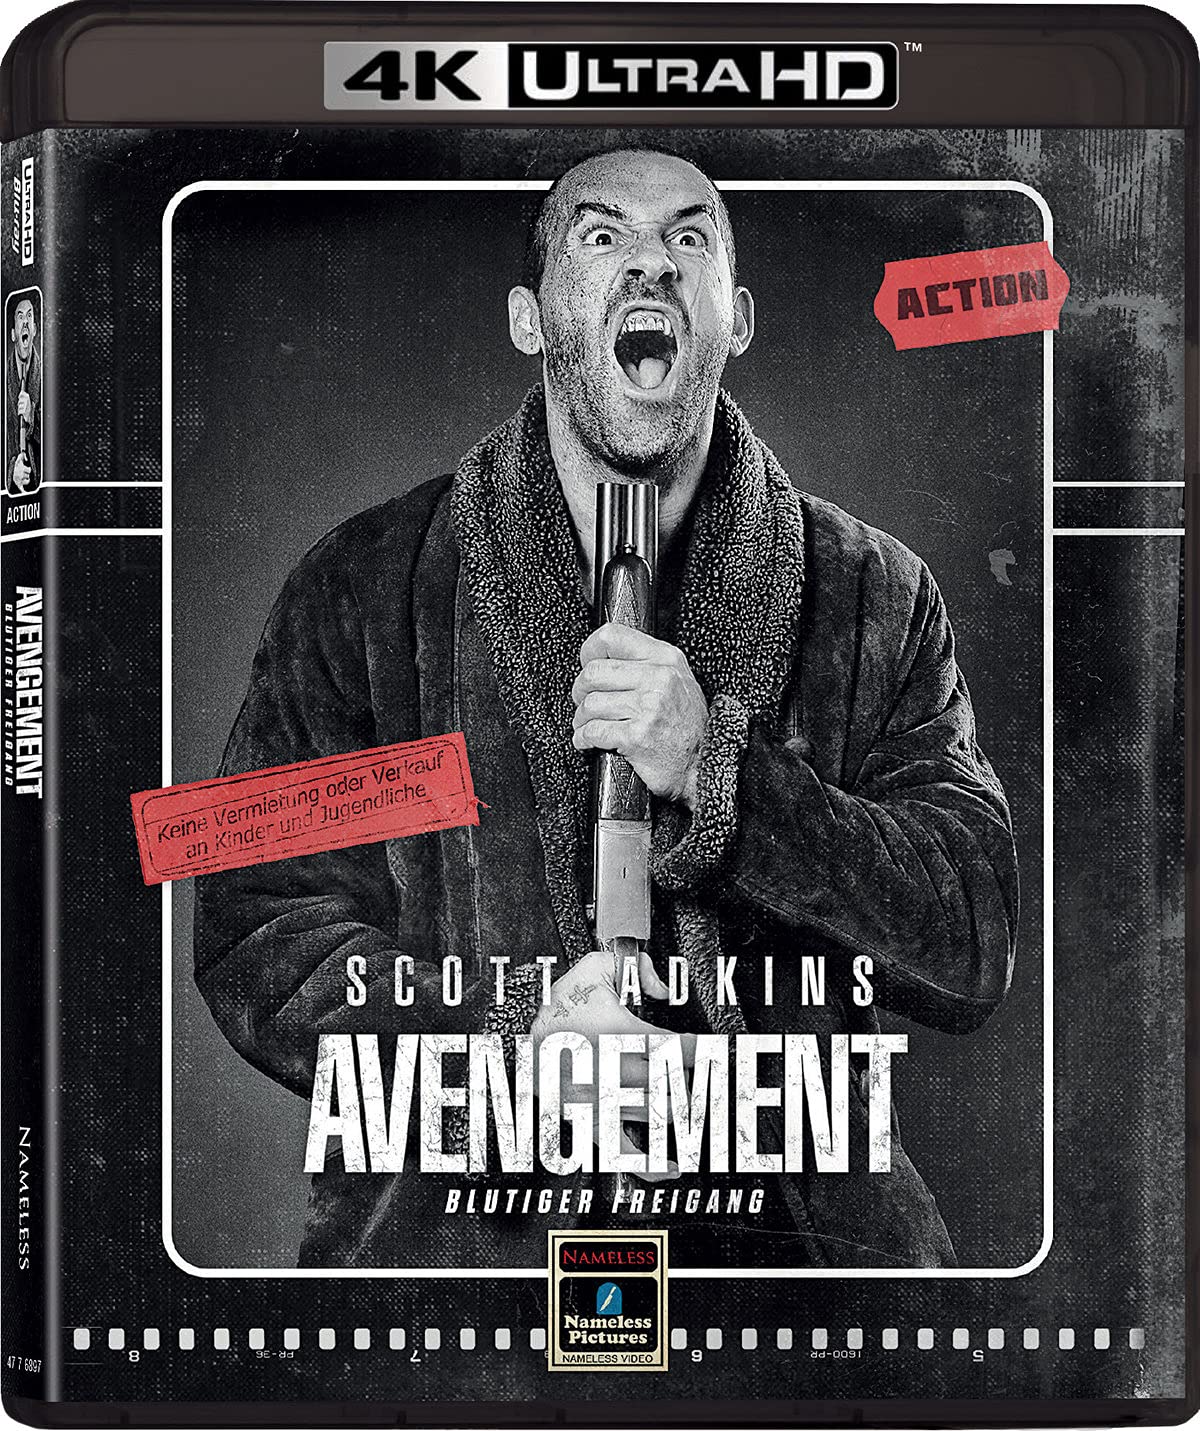 Avengement - Blutiger Freigang - Uncut (4K Ultra HD) [Blu-ray]